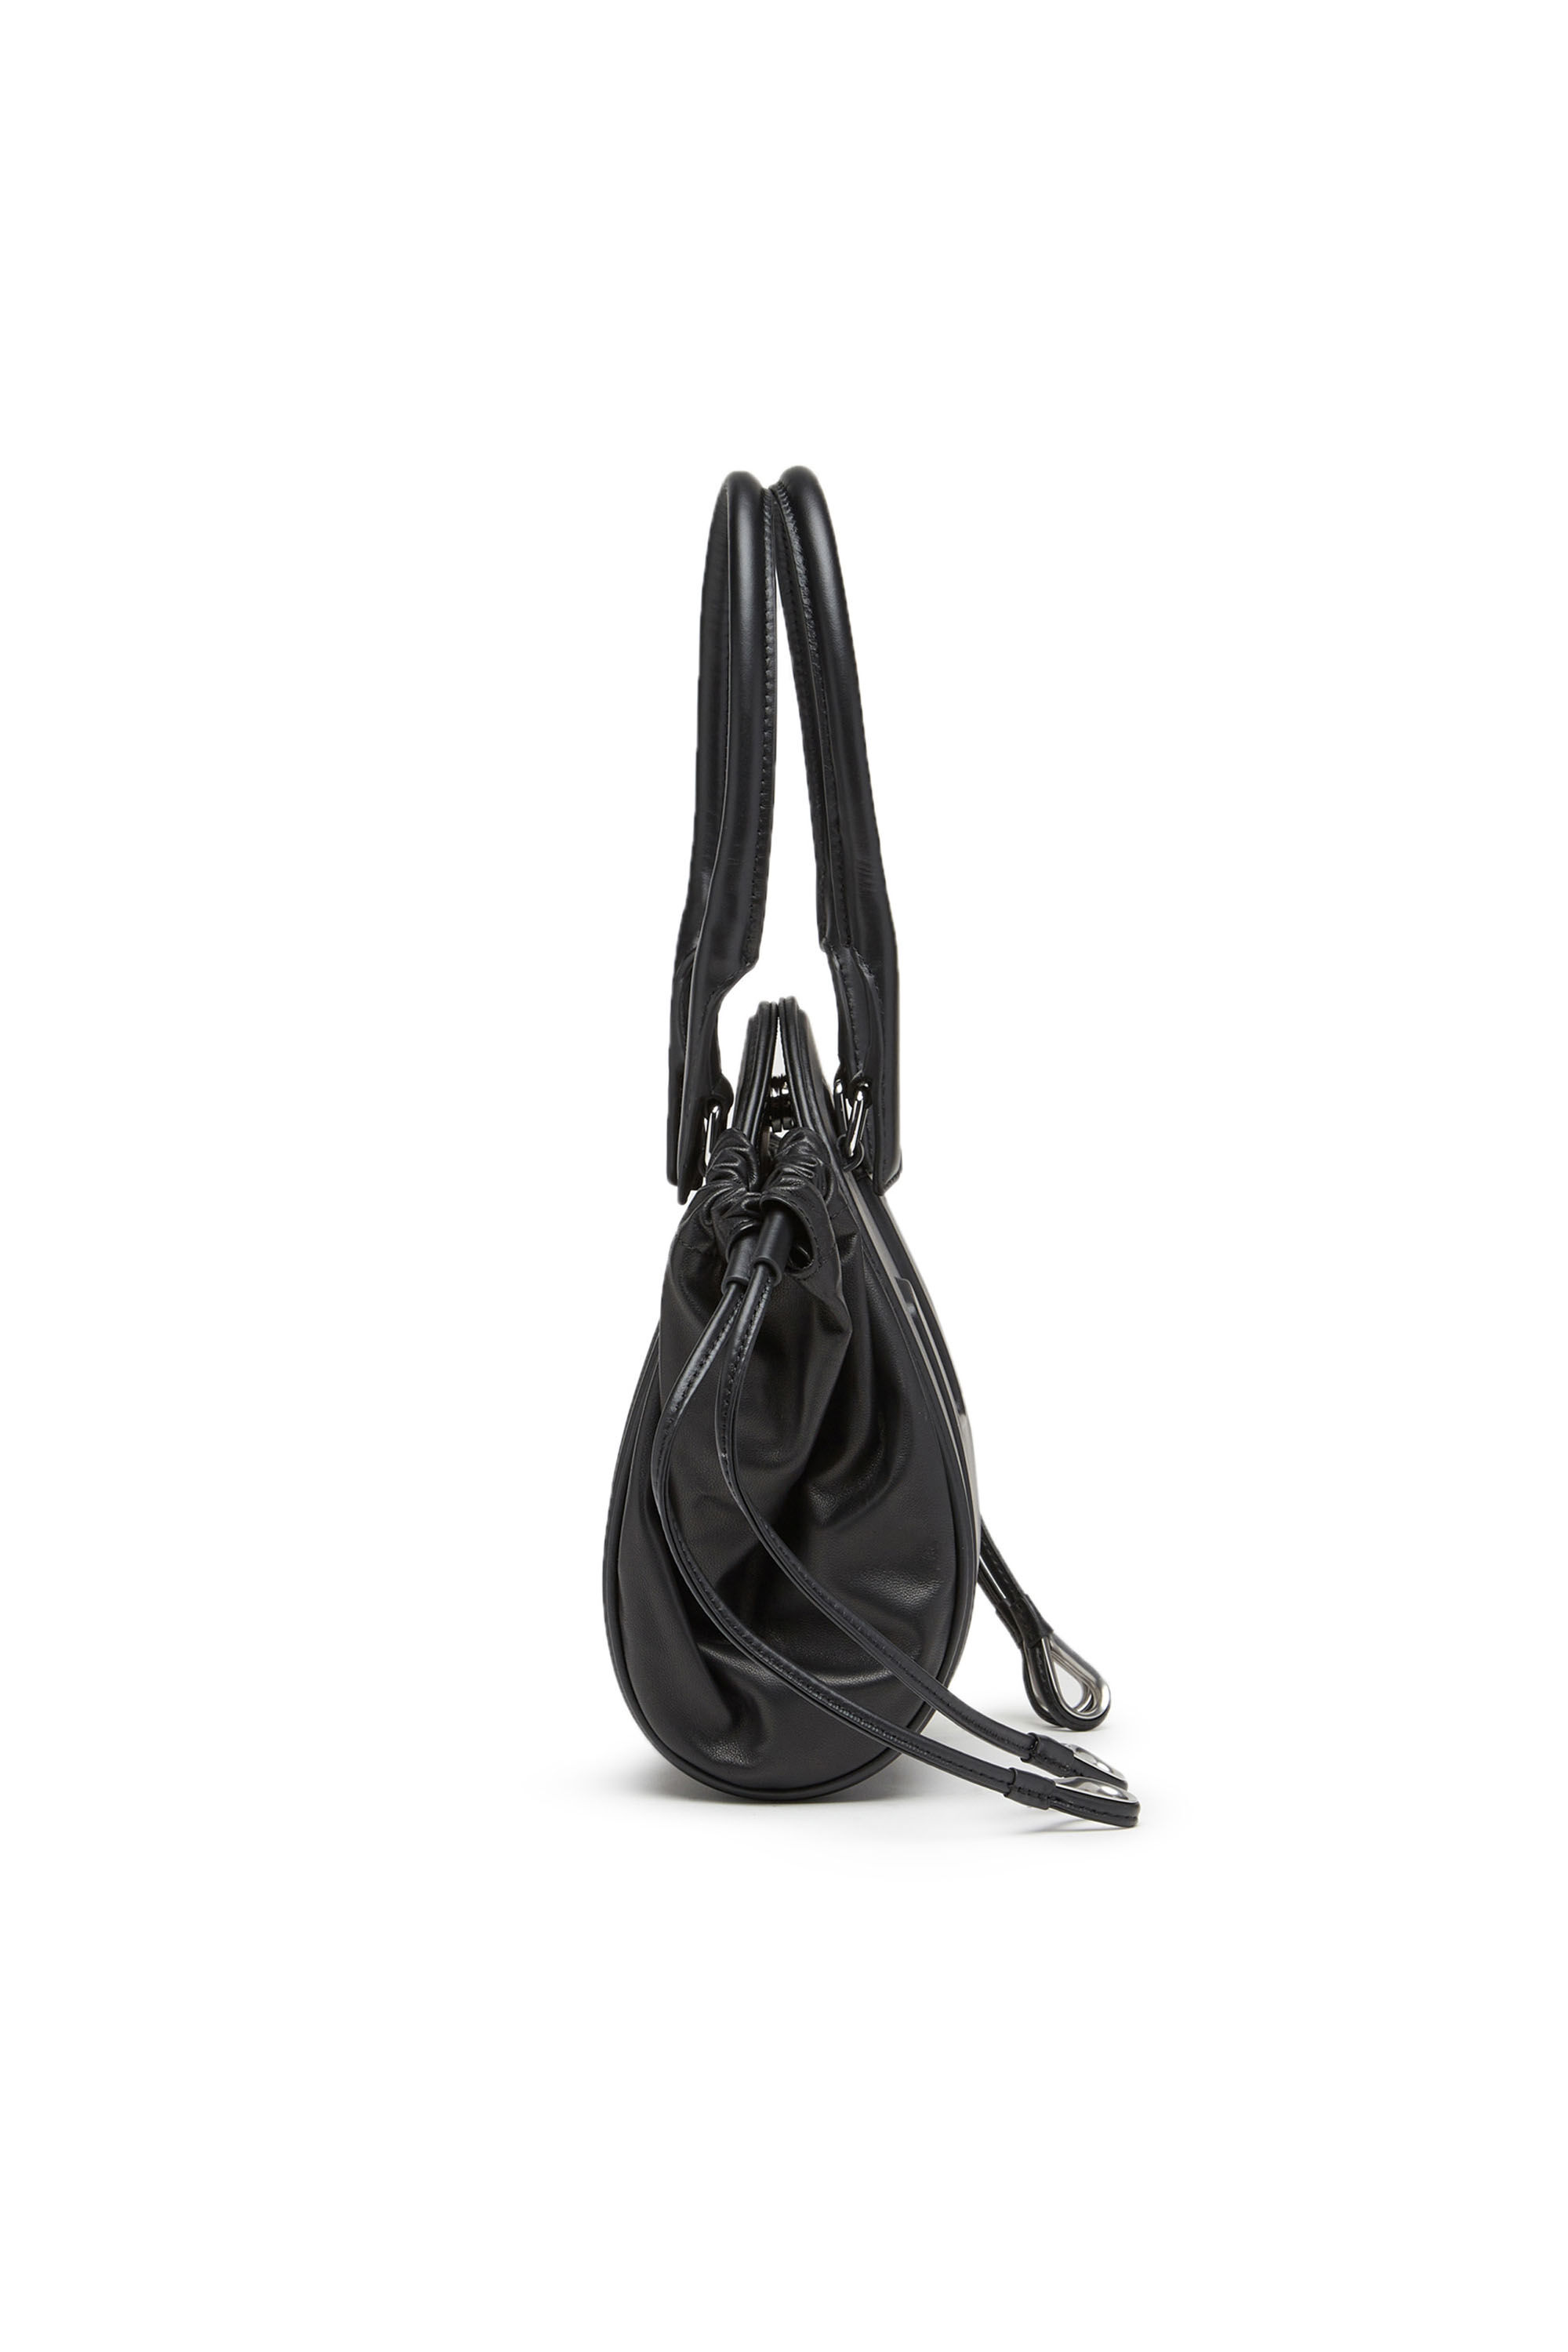 Diesel - 1DR-FOLD XS, Woman 1DR-Fold XS-Oval logo handbag in nappa leather in Black - Image 4